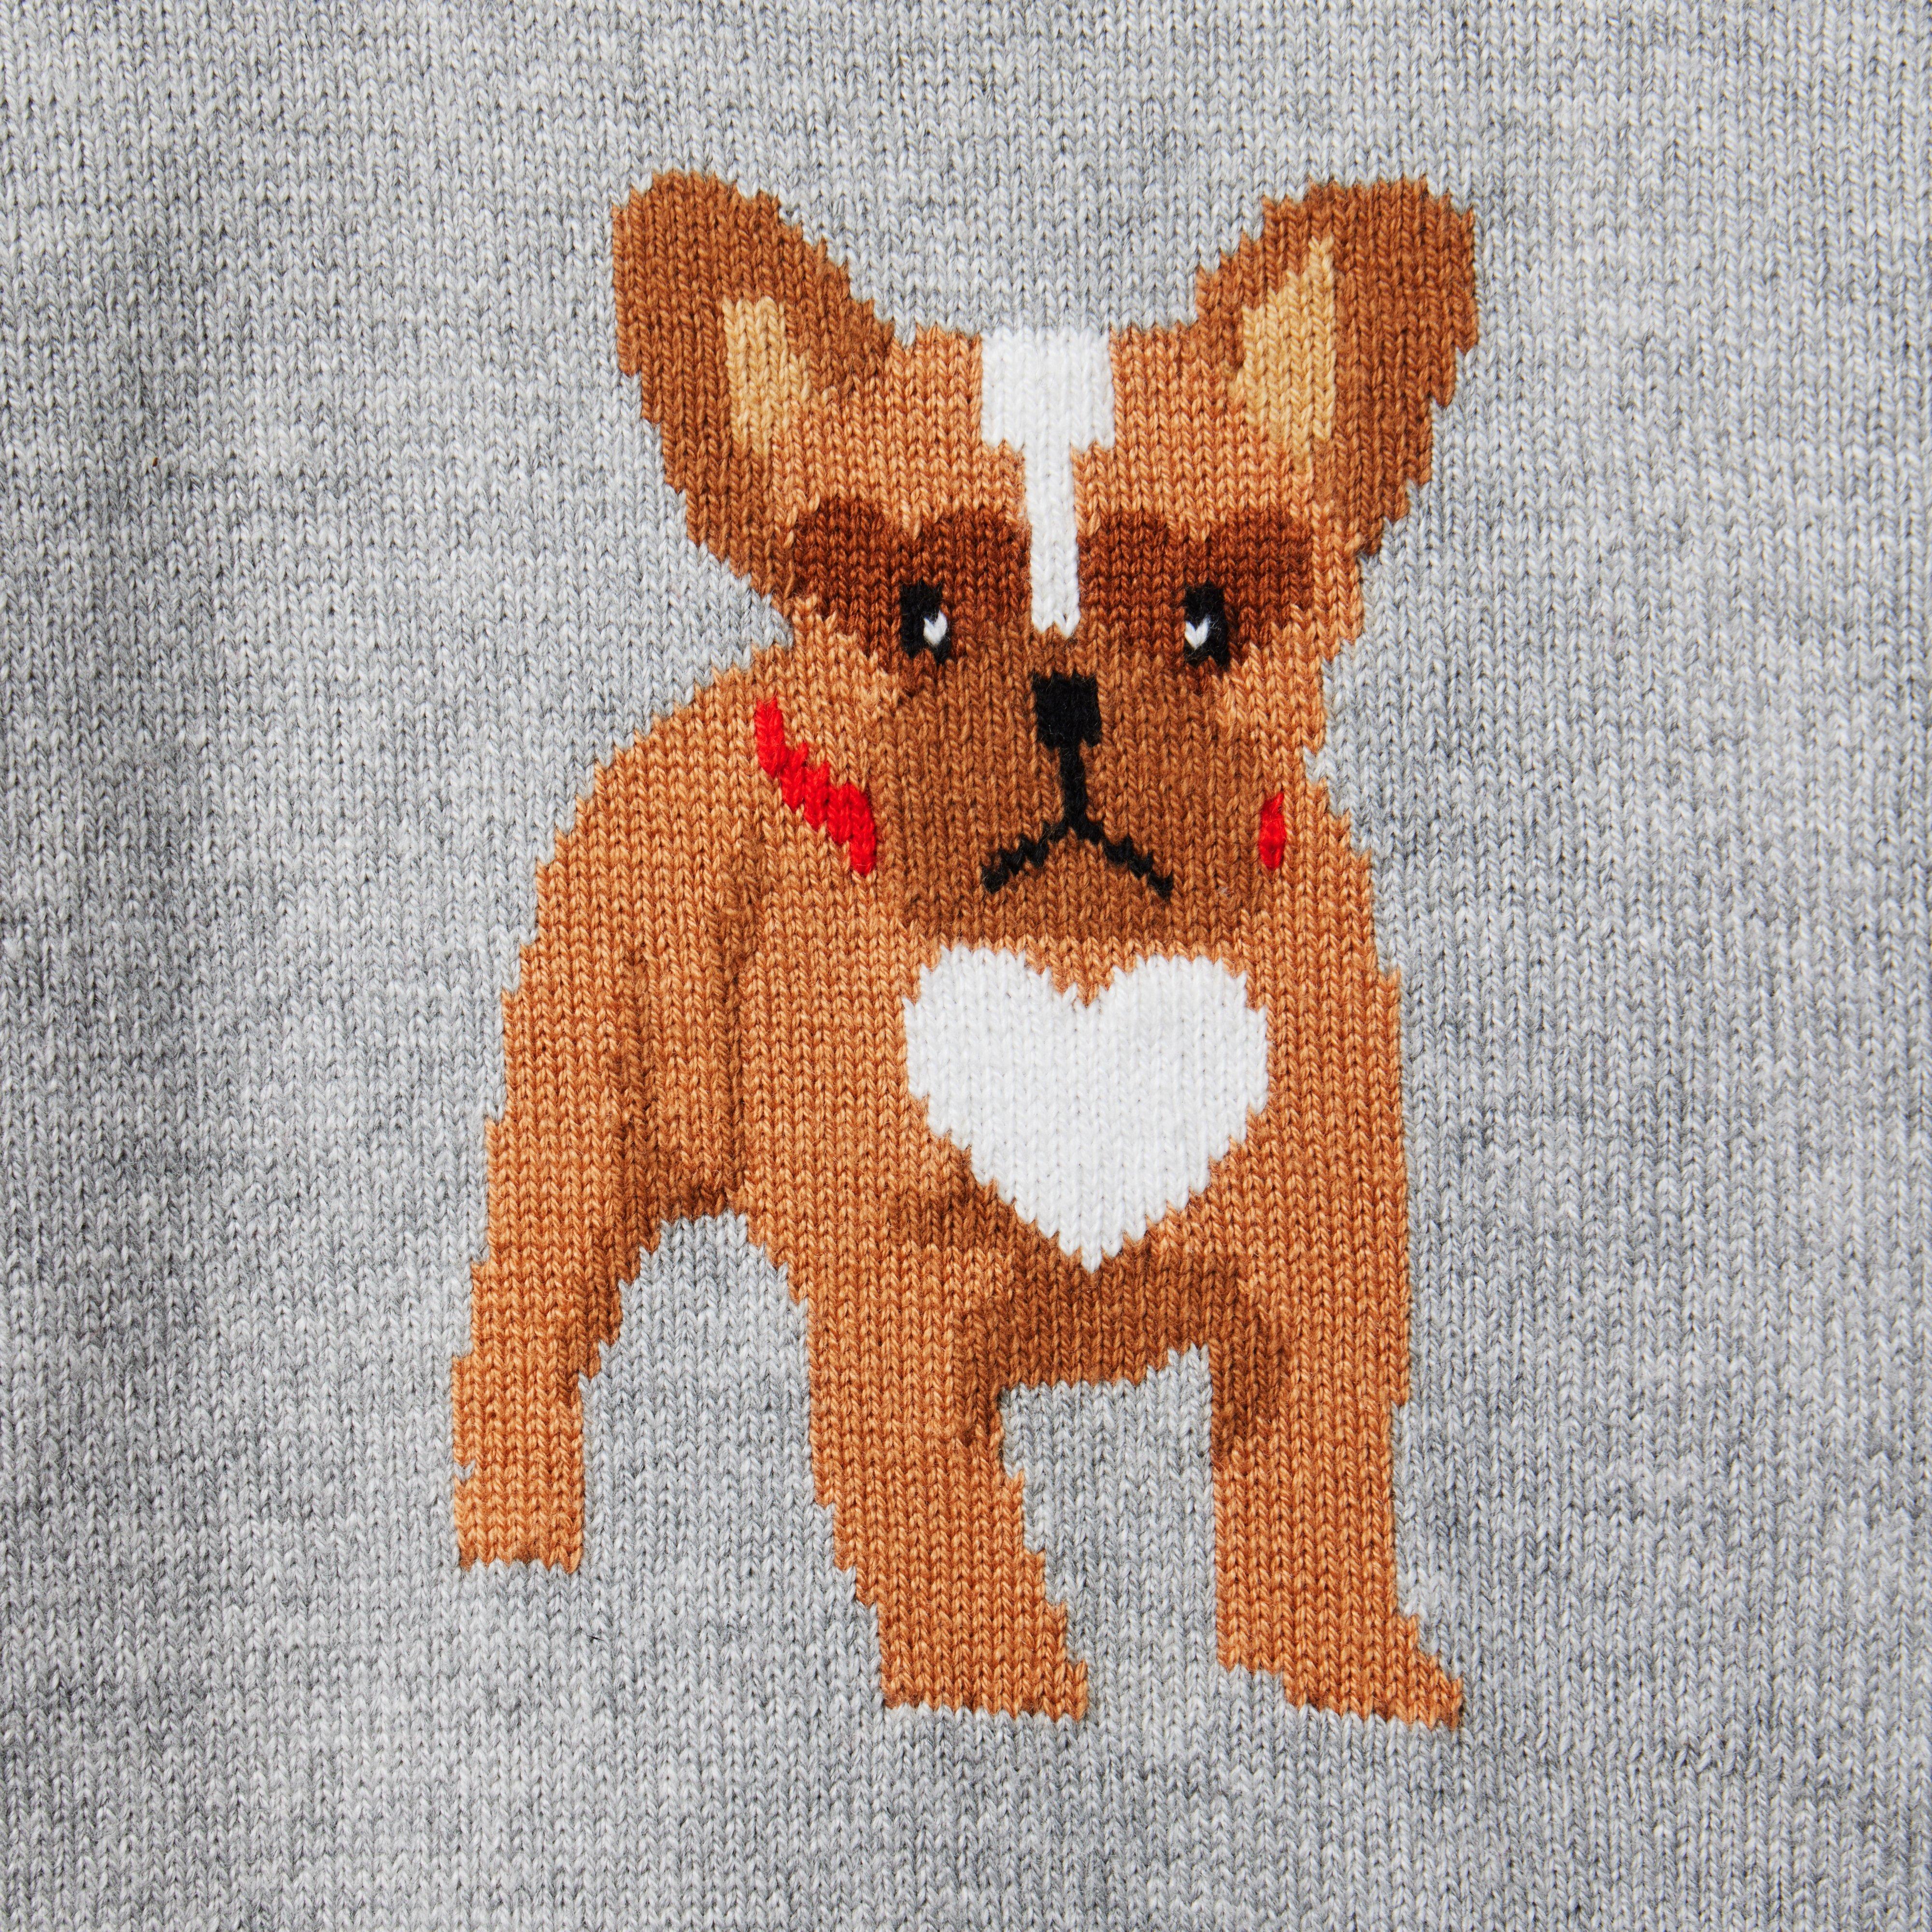 French Bulldog Sweater